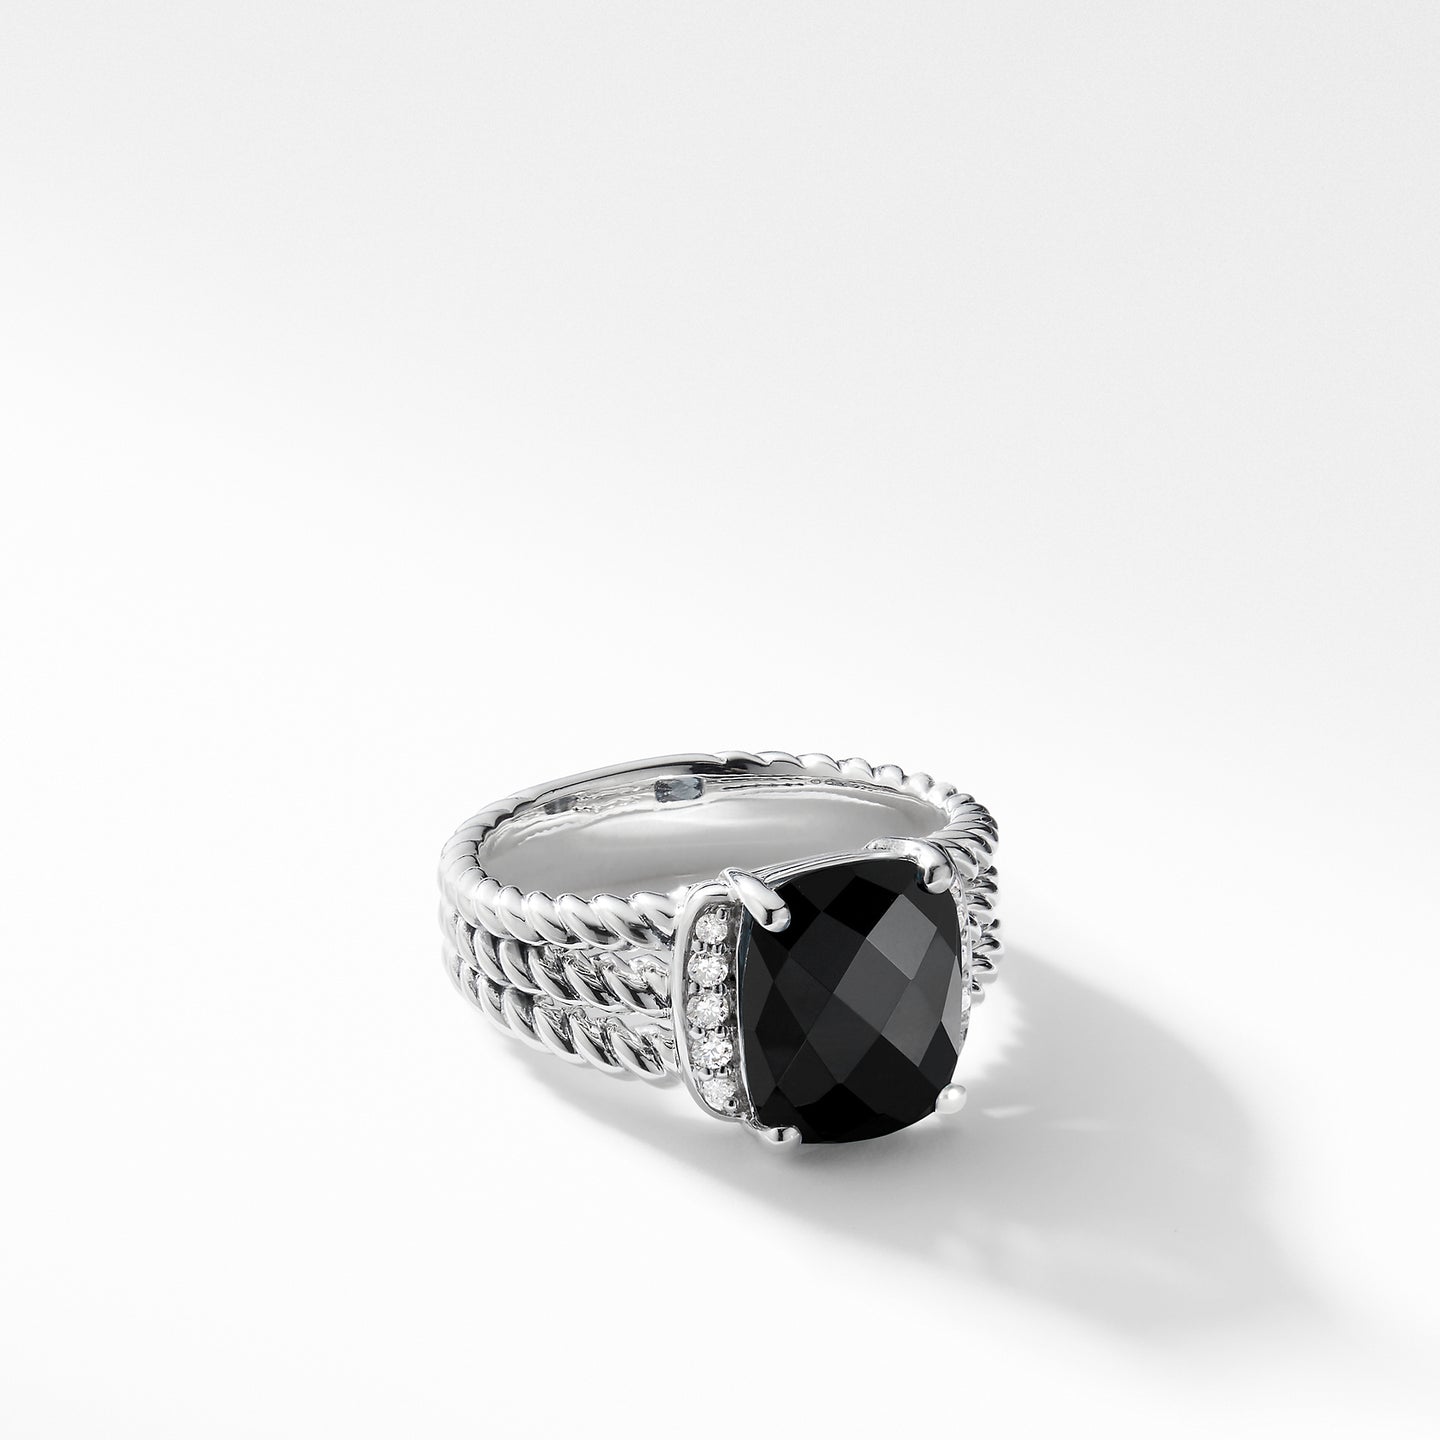 Petite Wheaton Ring with Black Onyx and Diamonds, Size 6